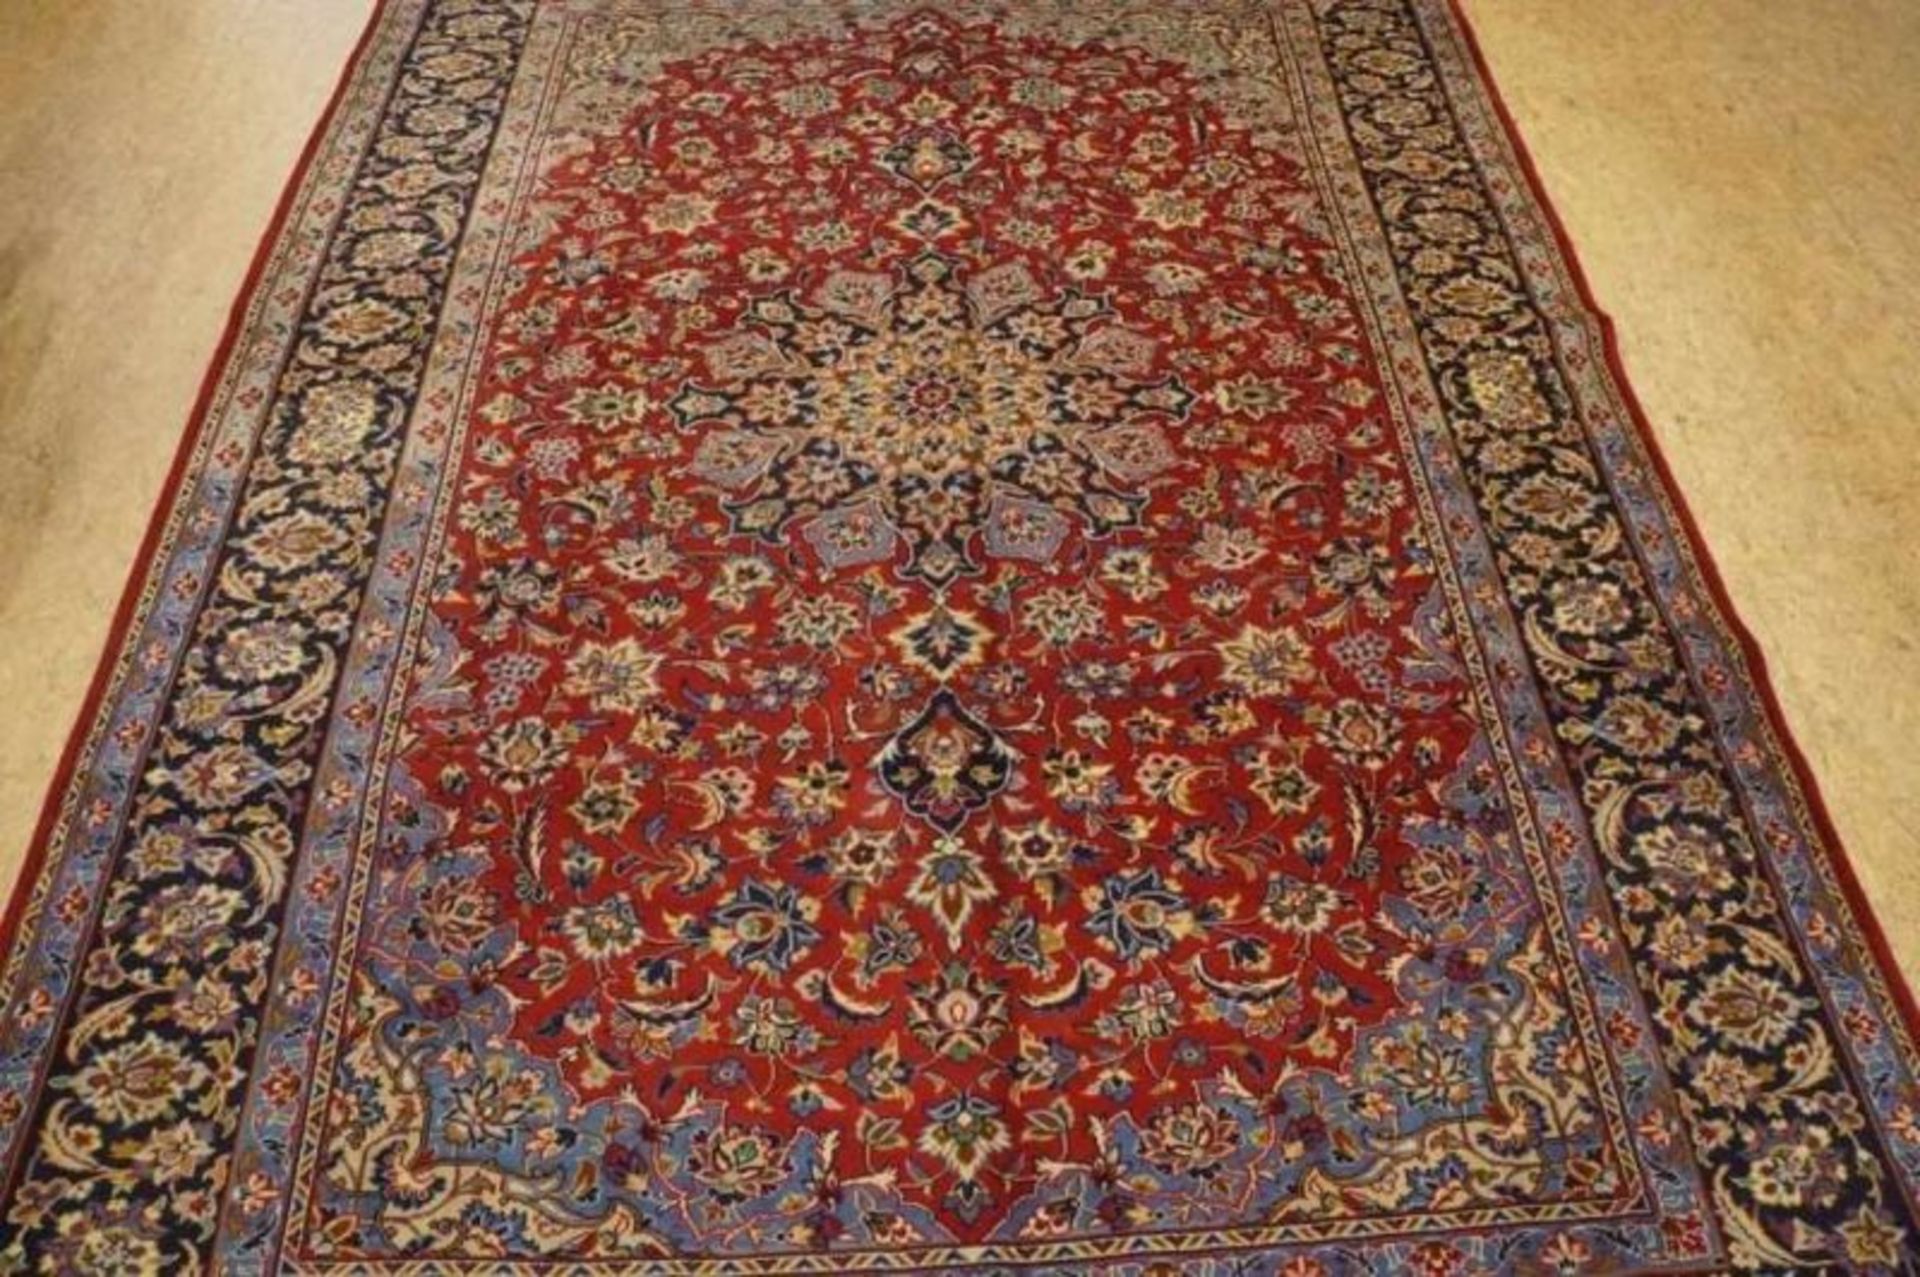 Tapijt, Jaz, 360 x 265 cm. Carpet, Jaz, 360 x 265 cm.